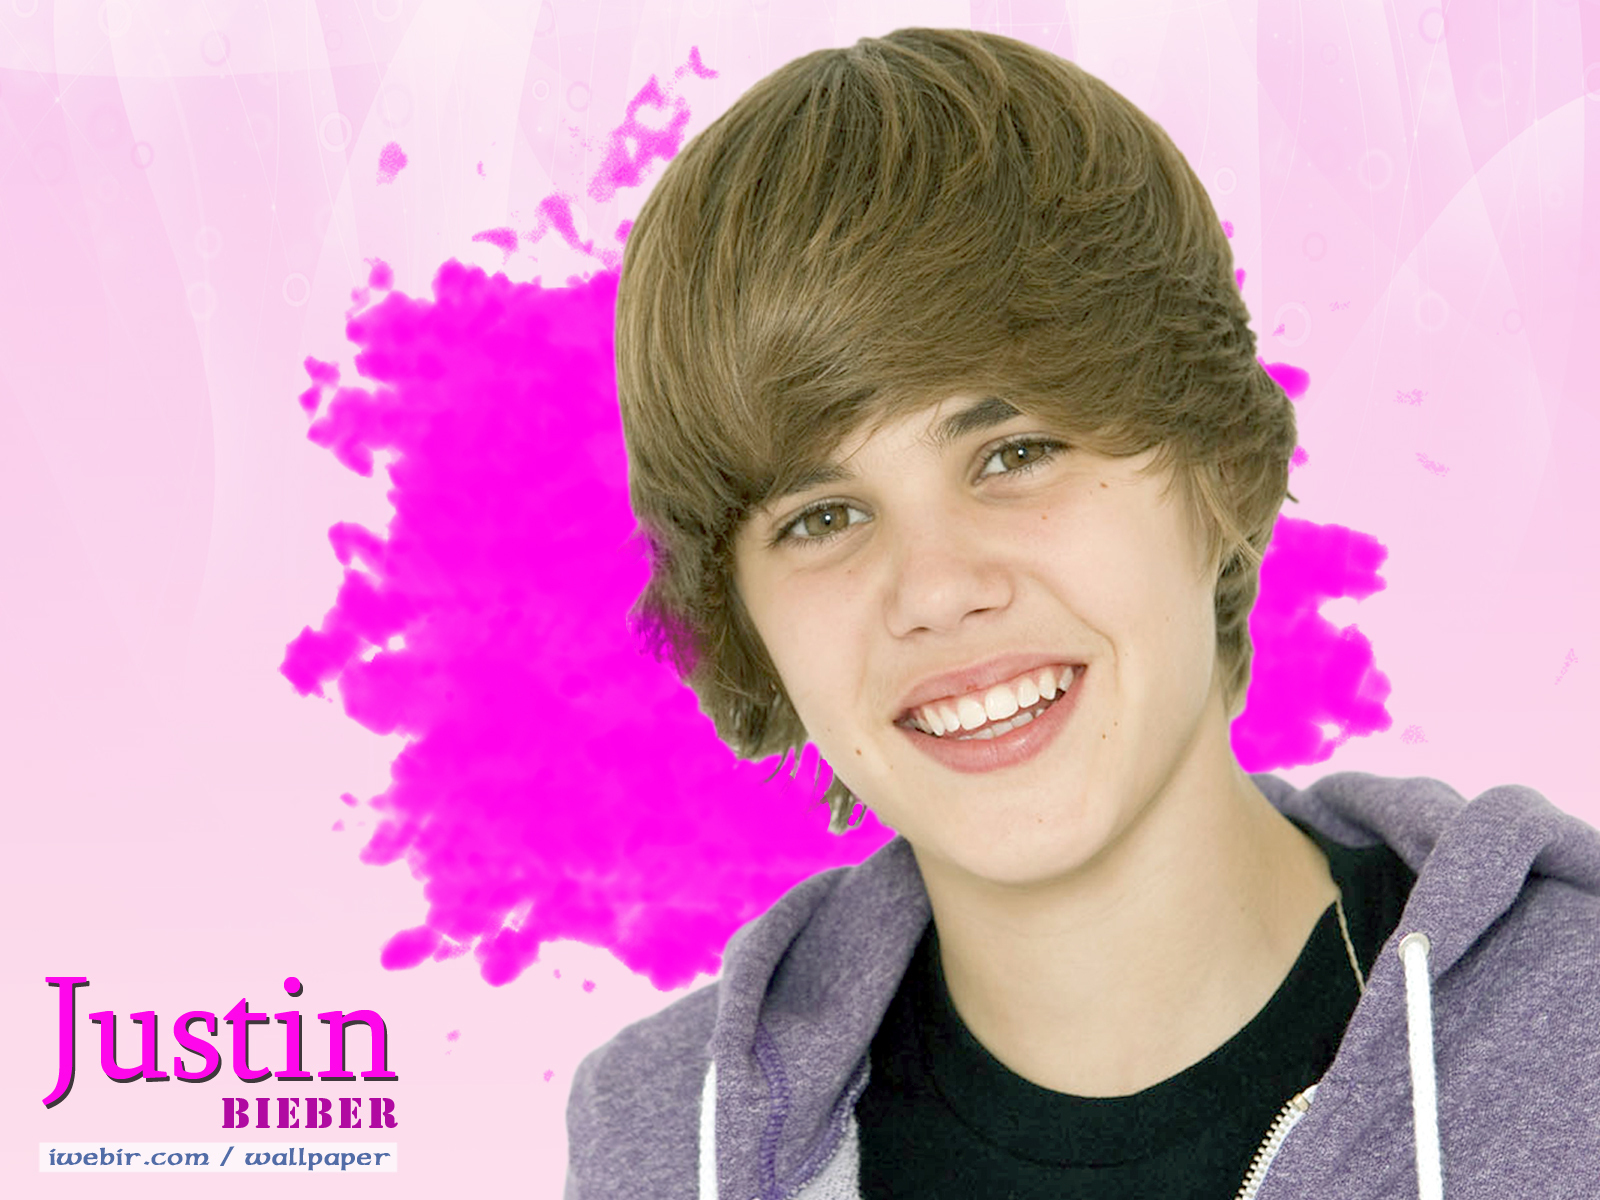 Justin Bieber Image Hot Wallpaper